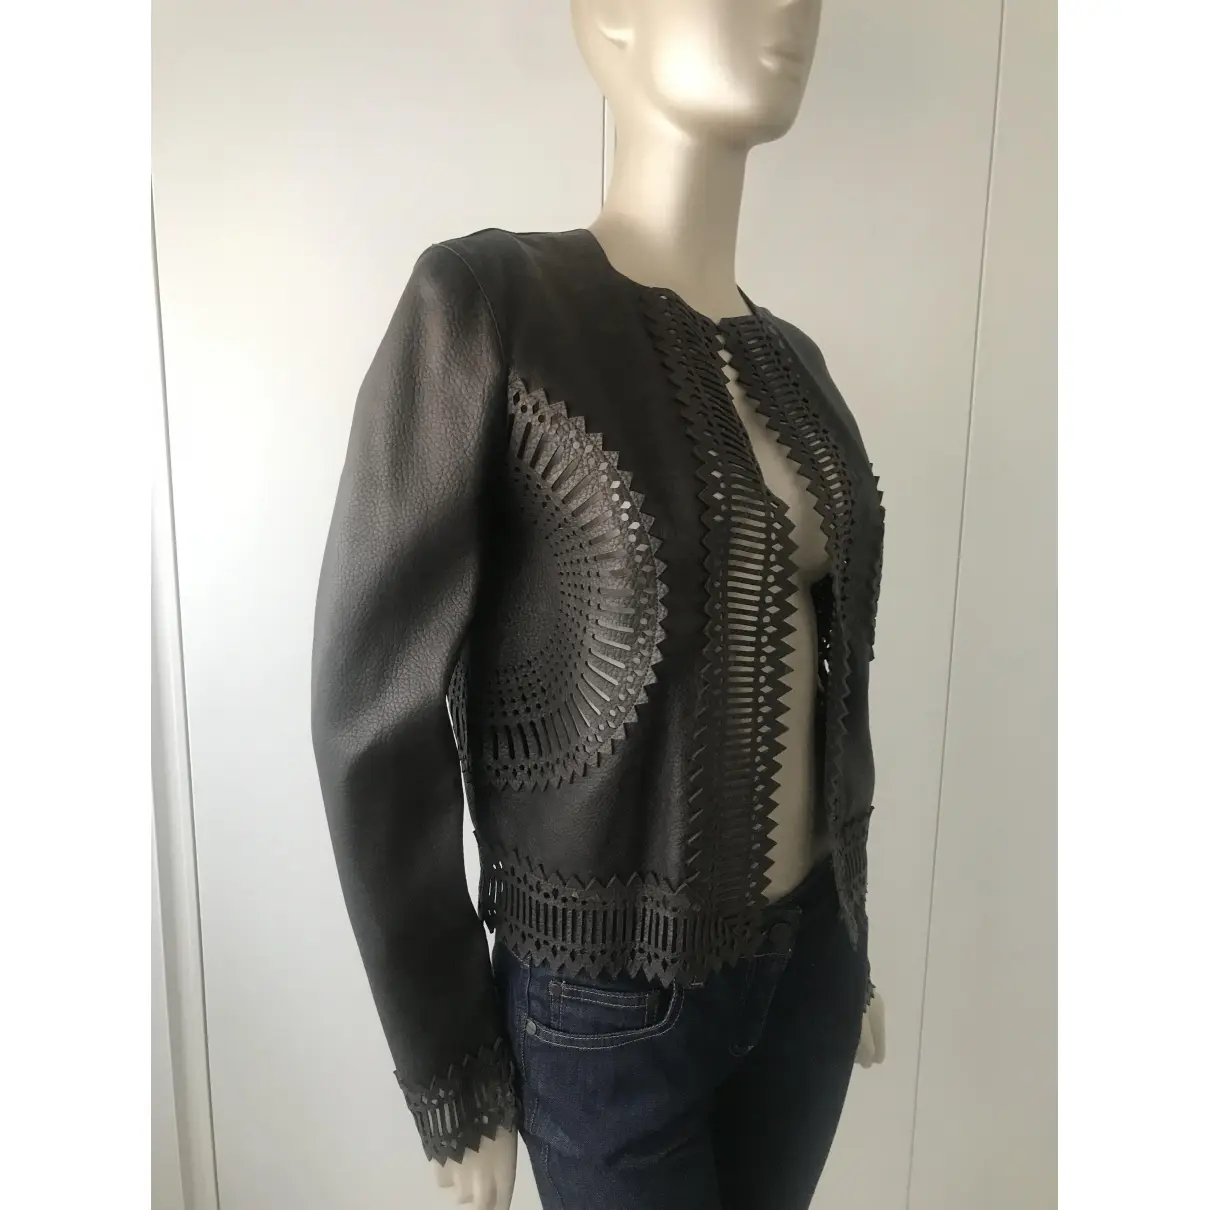 Buy Gianfranco Ferré Leather jacket online - Vintage